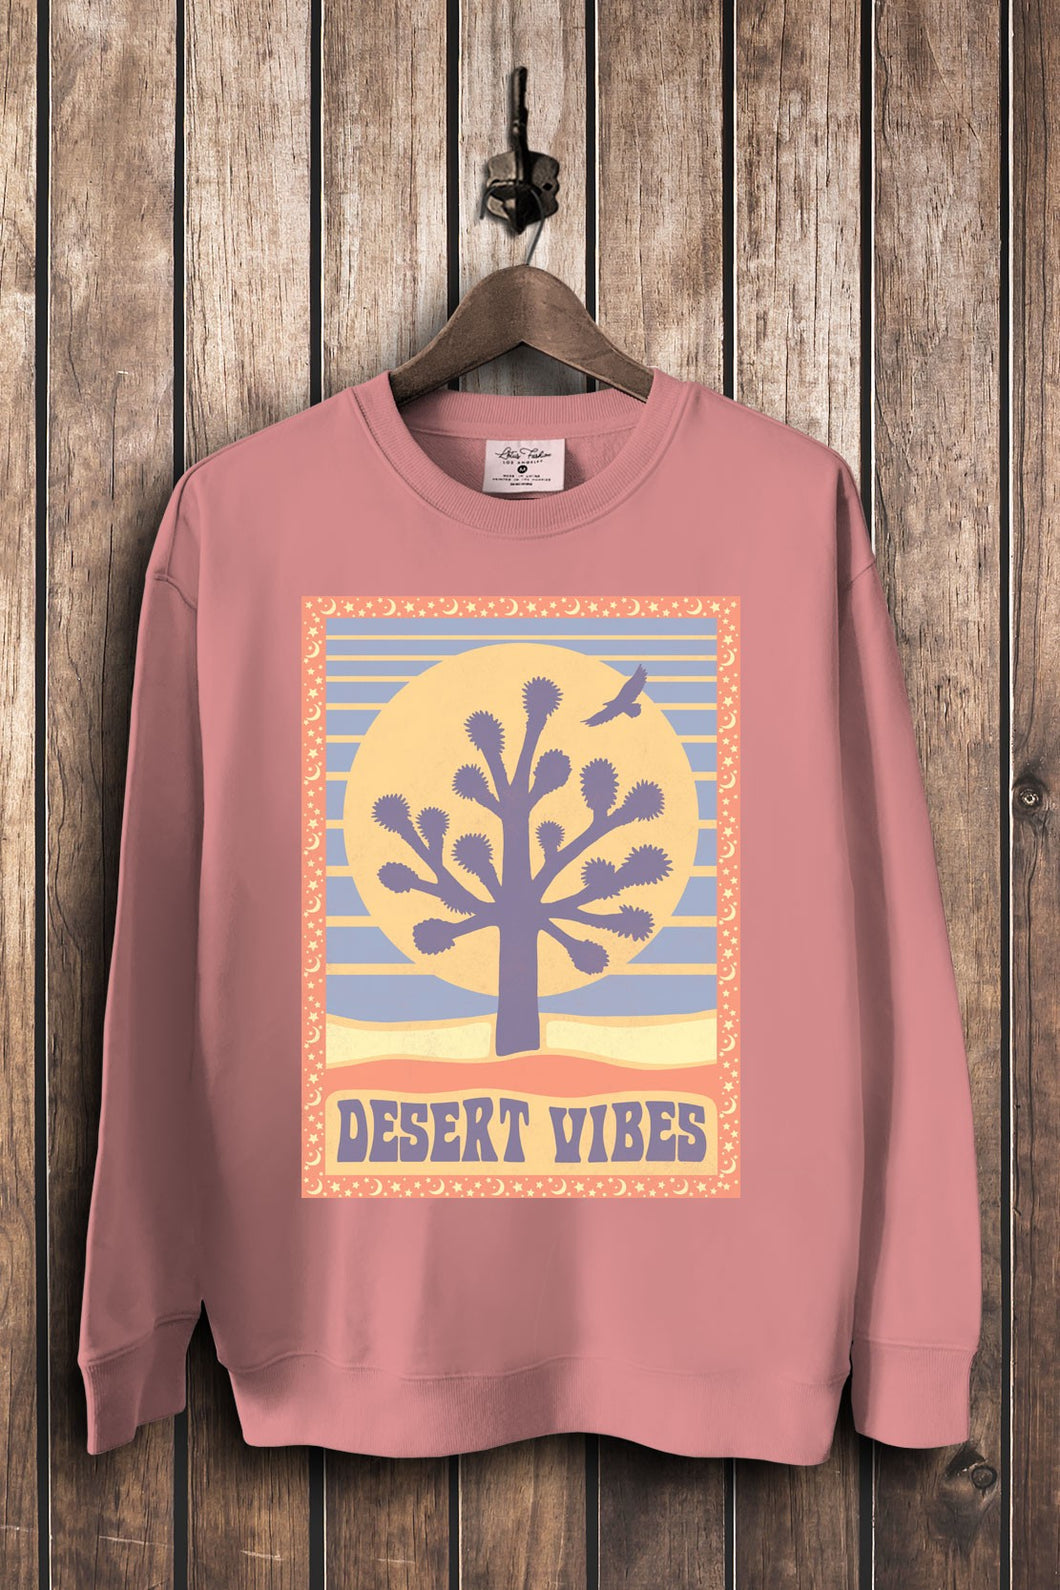 The Desert Vibes Sweatshirt